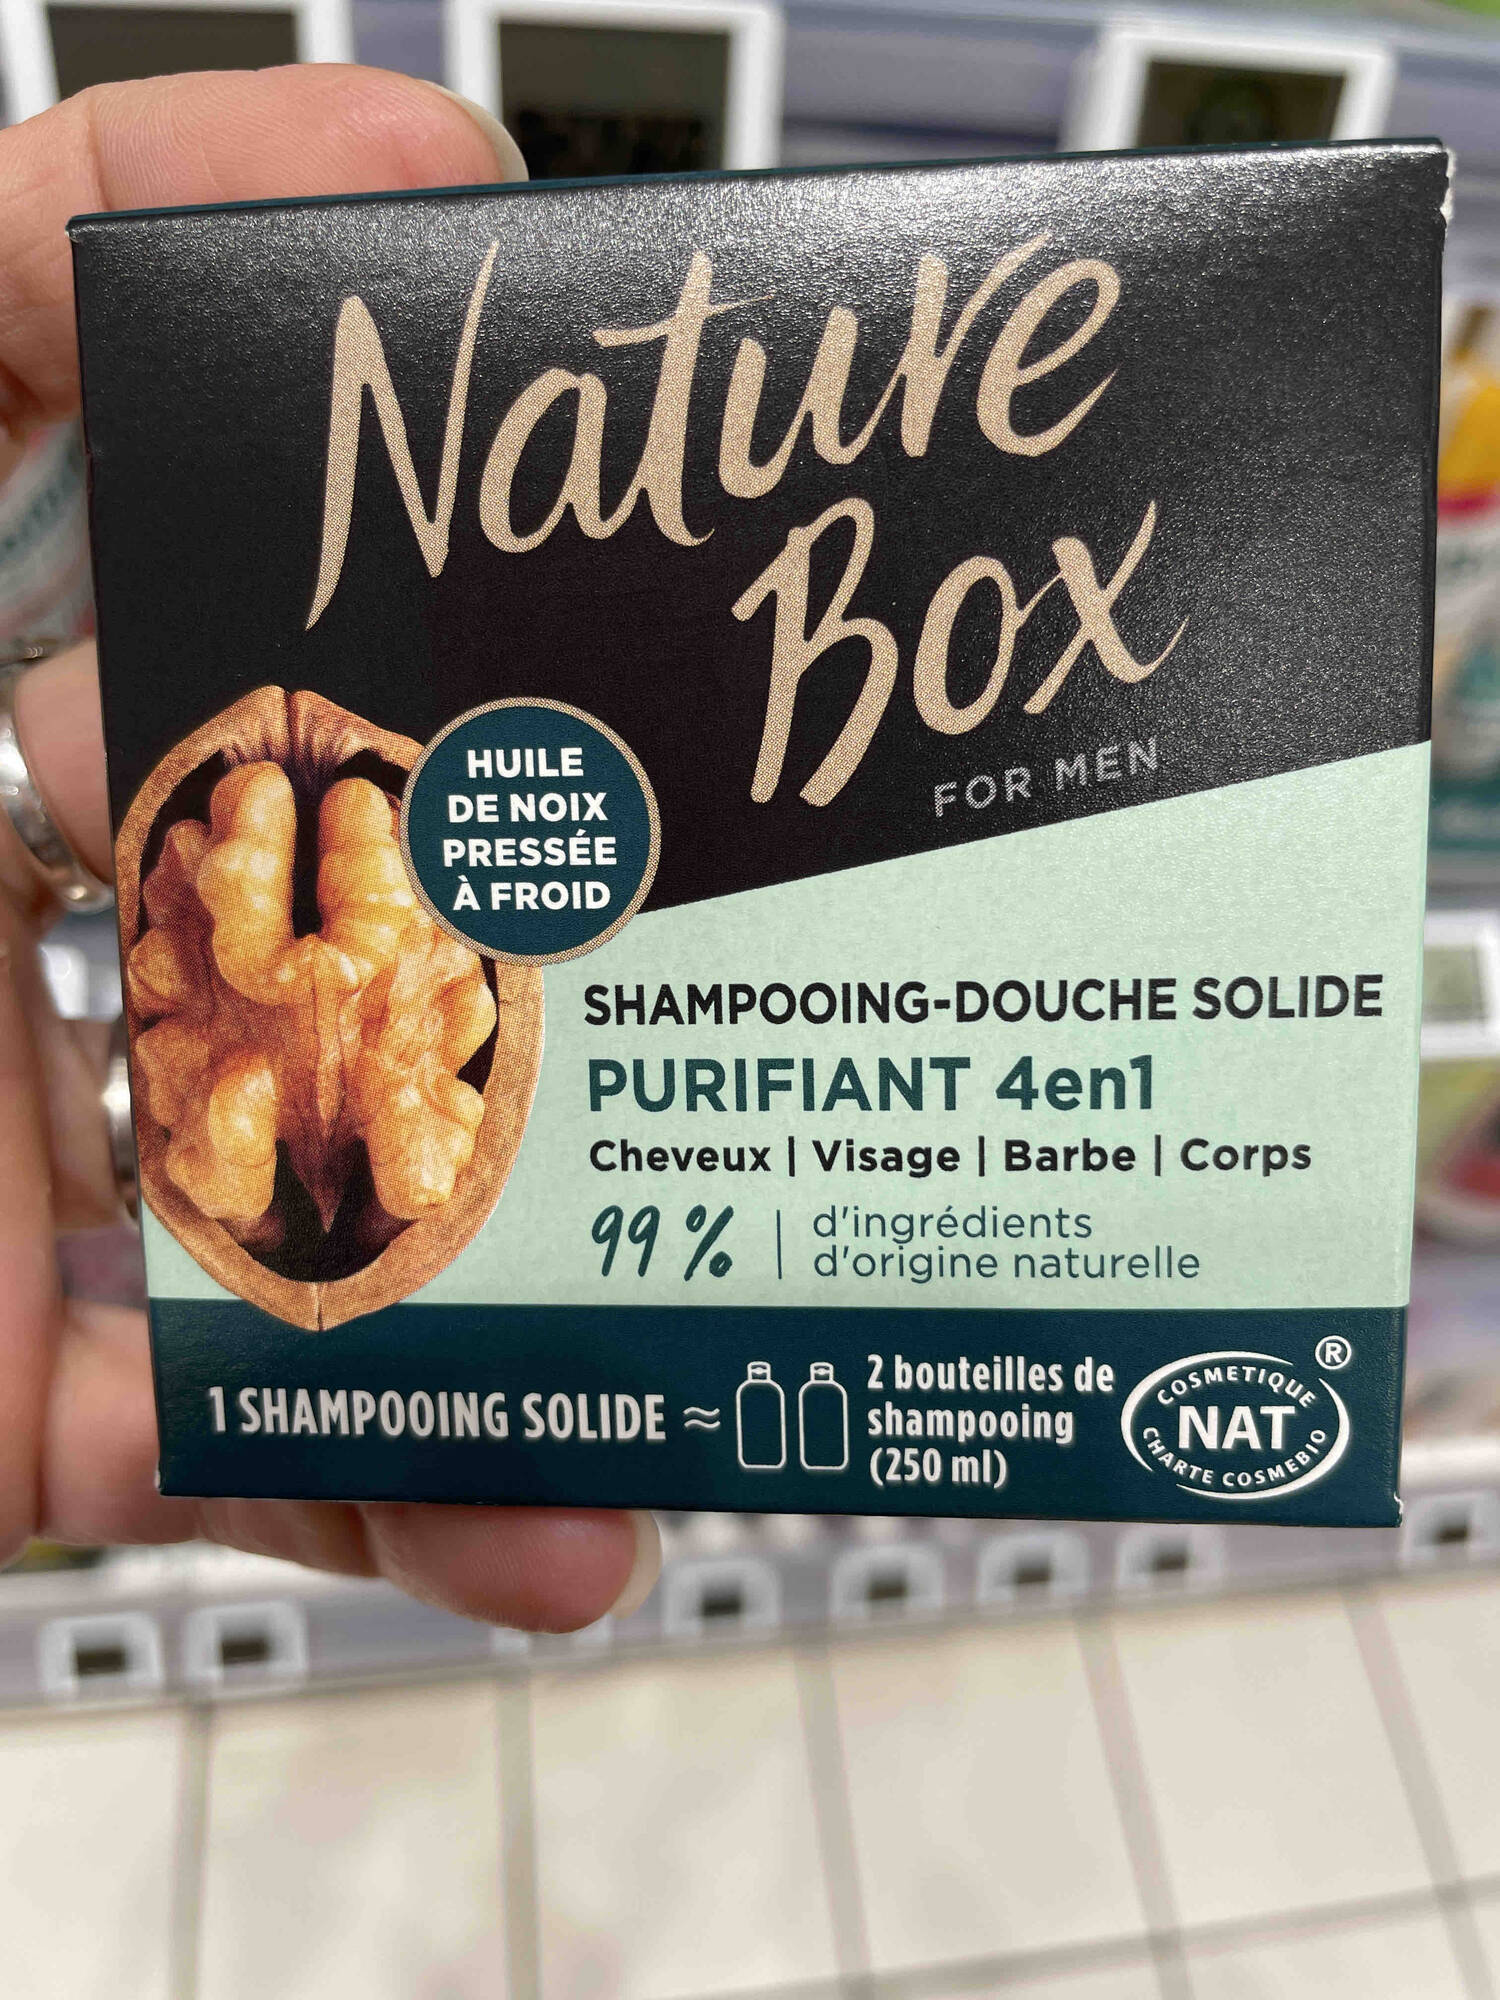 NATURE BOX - For Men - Shampooing-douche solide purifiant 4 en 1